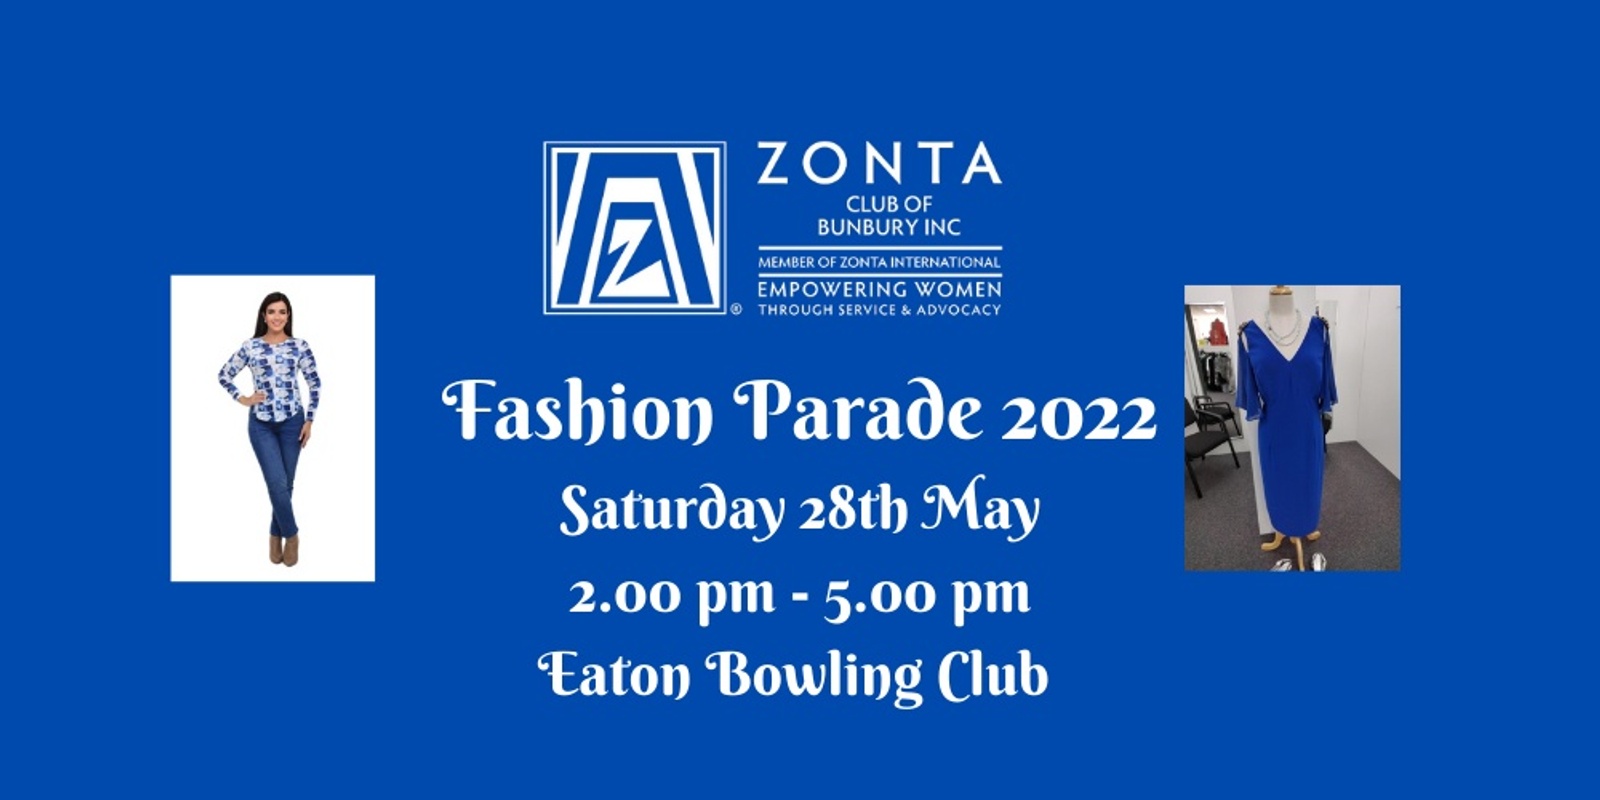 Banner image for Zonta Bunbury Fashion Parade 2022